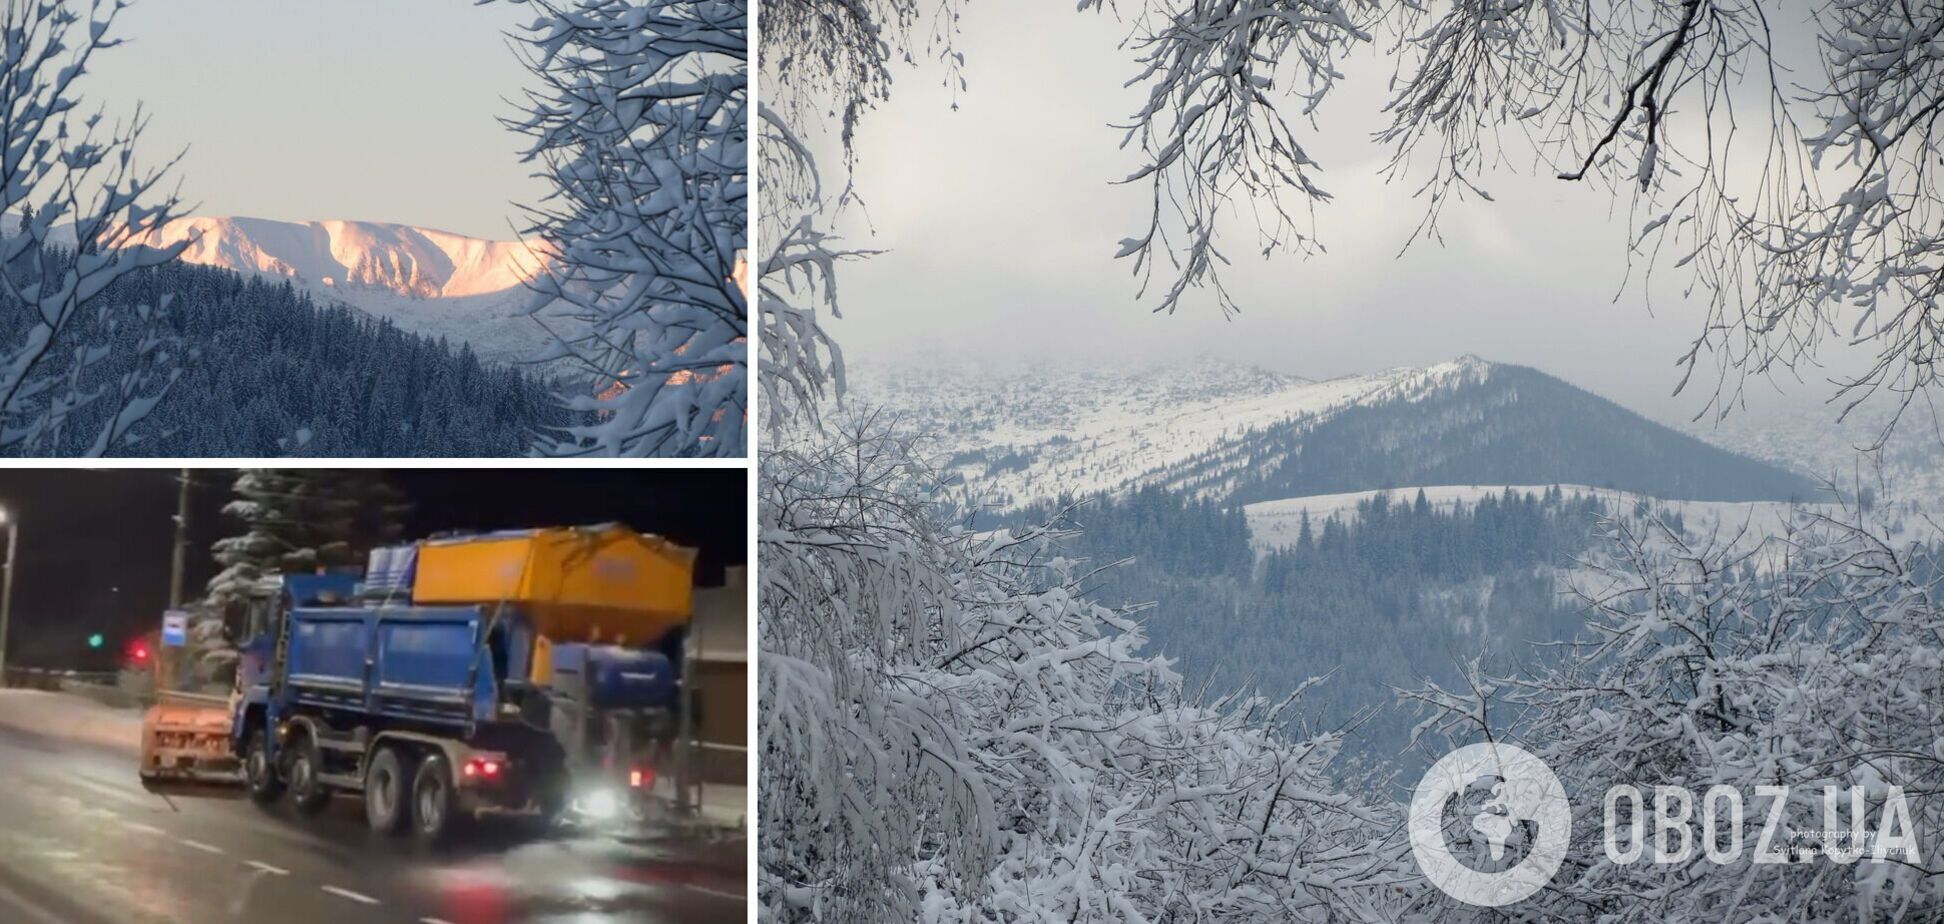 В Карпатах намело полметра снега: туристов предупредили об опасности. Фото и видео